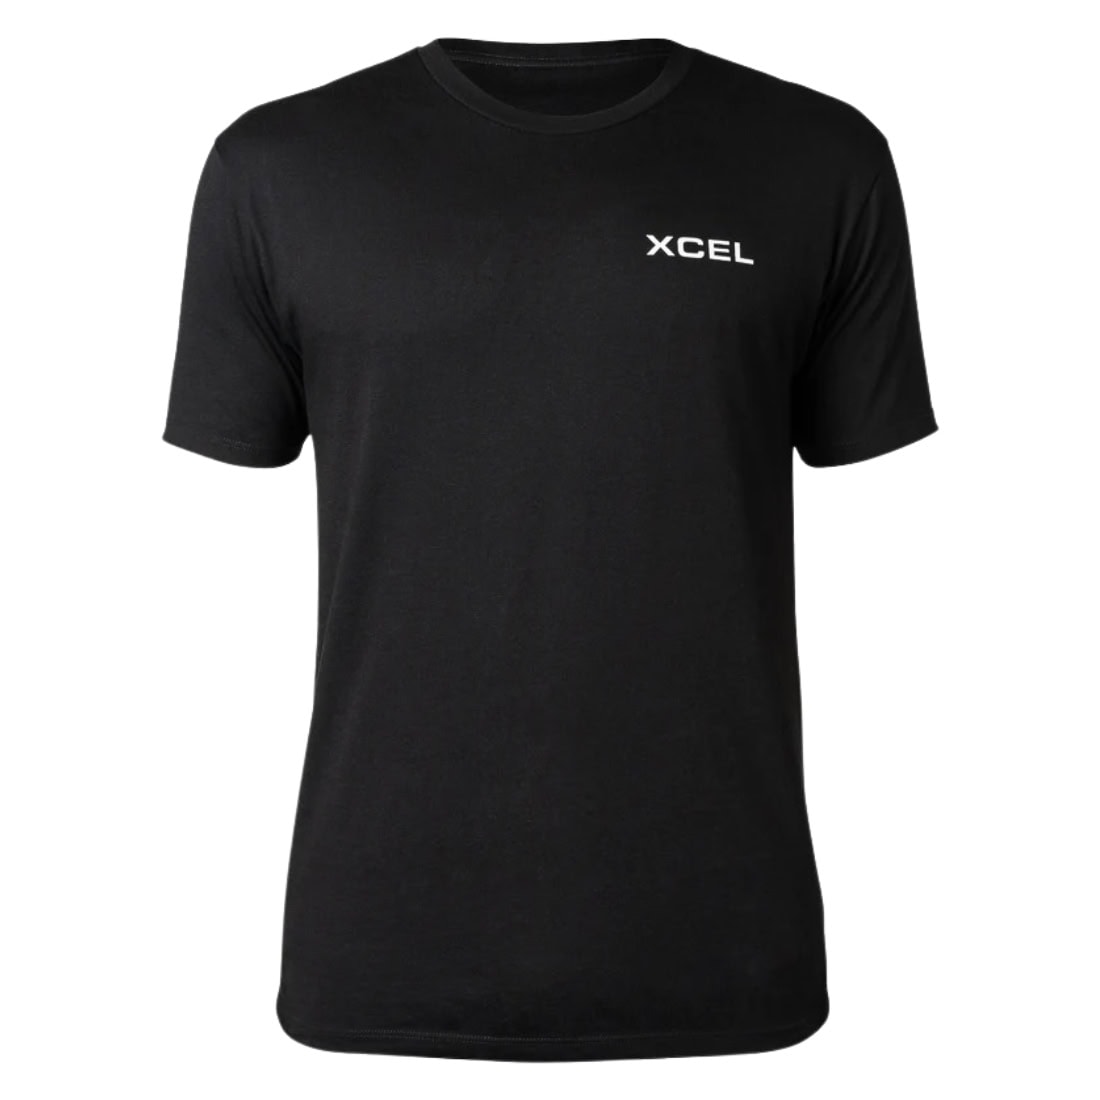 Xcel Comp X T-Shirt - Black - Mens Graphic T-Shirt by Xcel